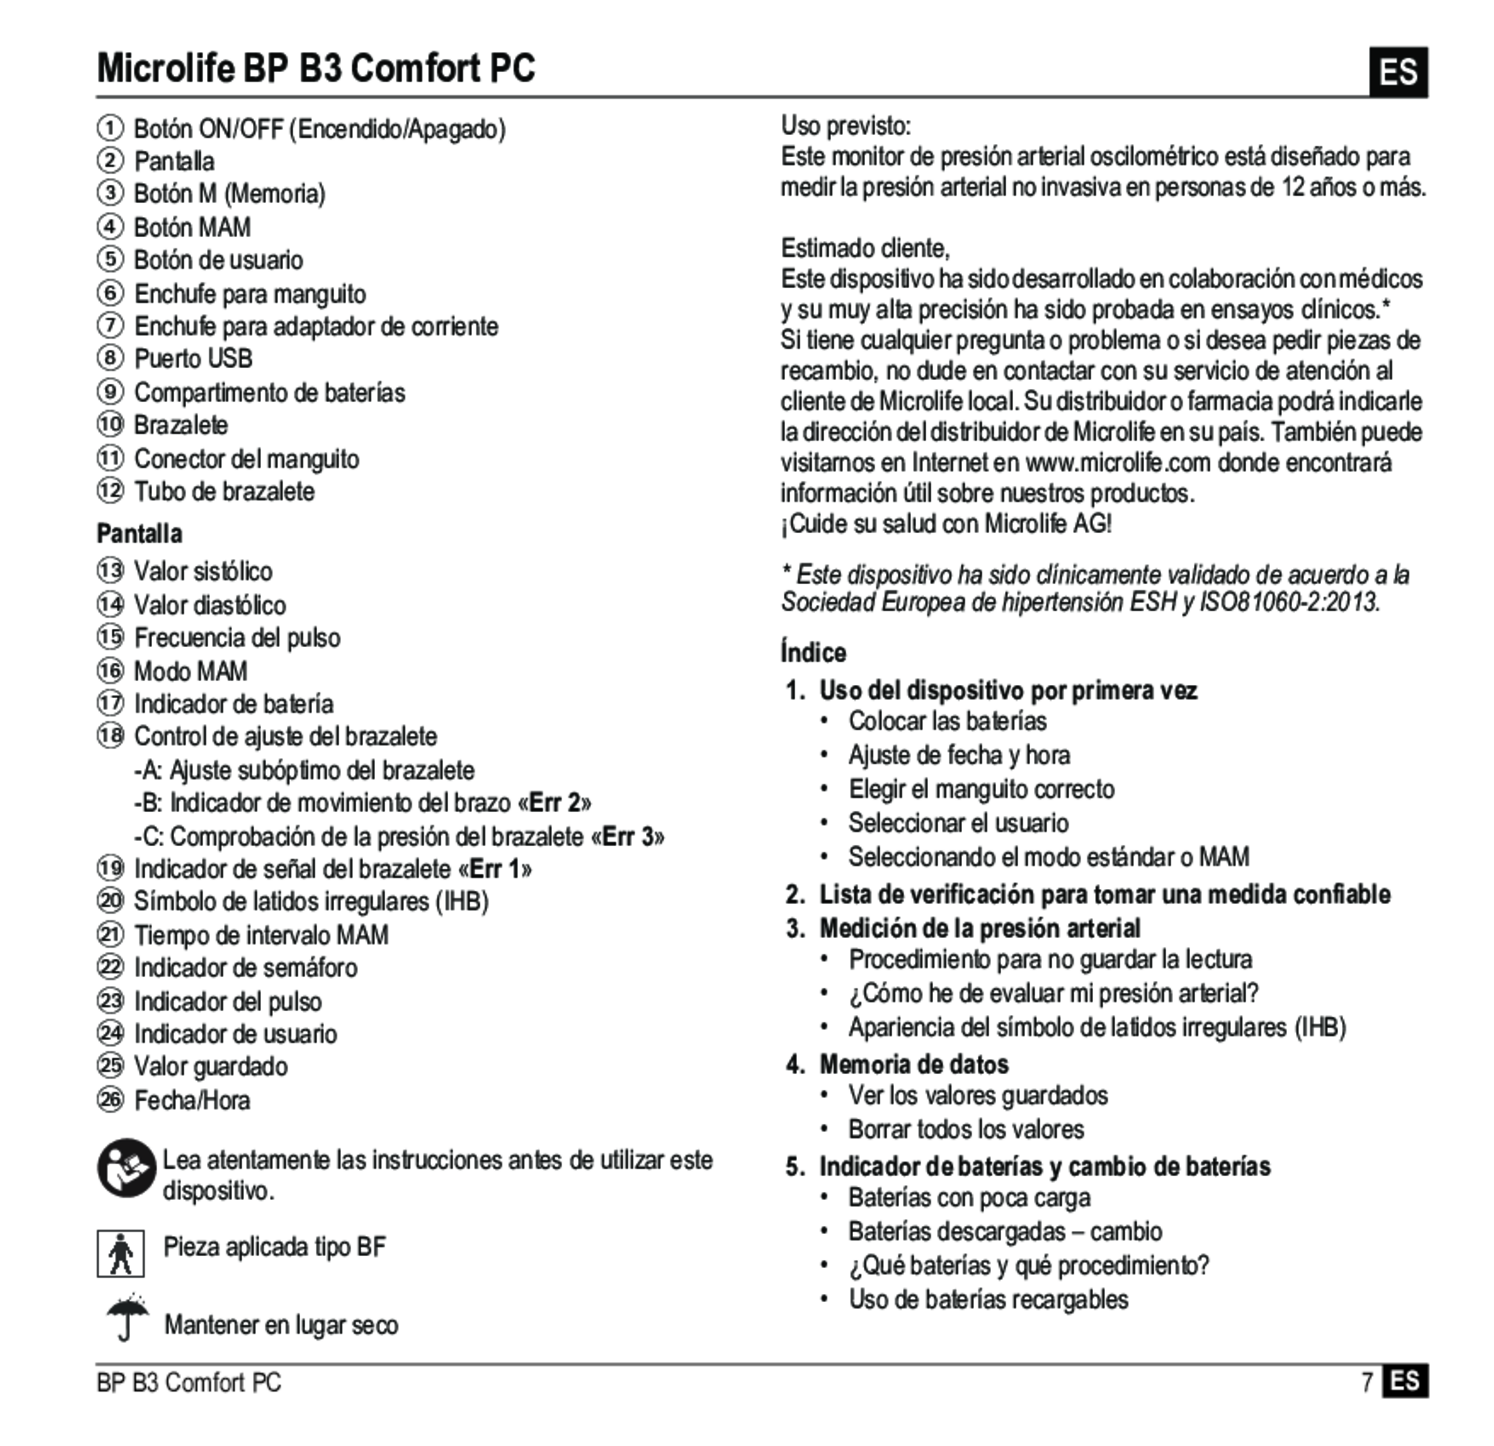 Microlife BP Bloeddrukmeter B3 Comfort PC afbeelding van document #9, gebruiksaanwijzing